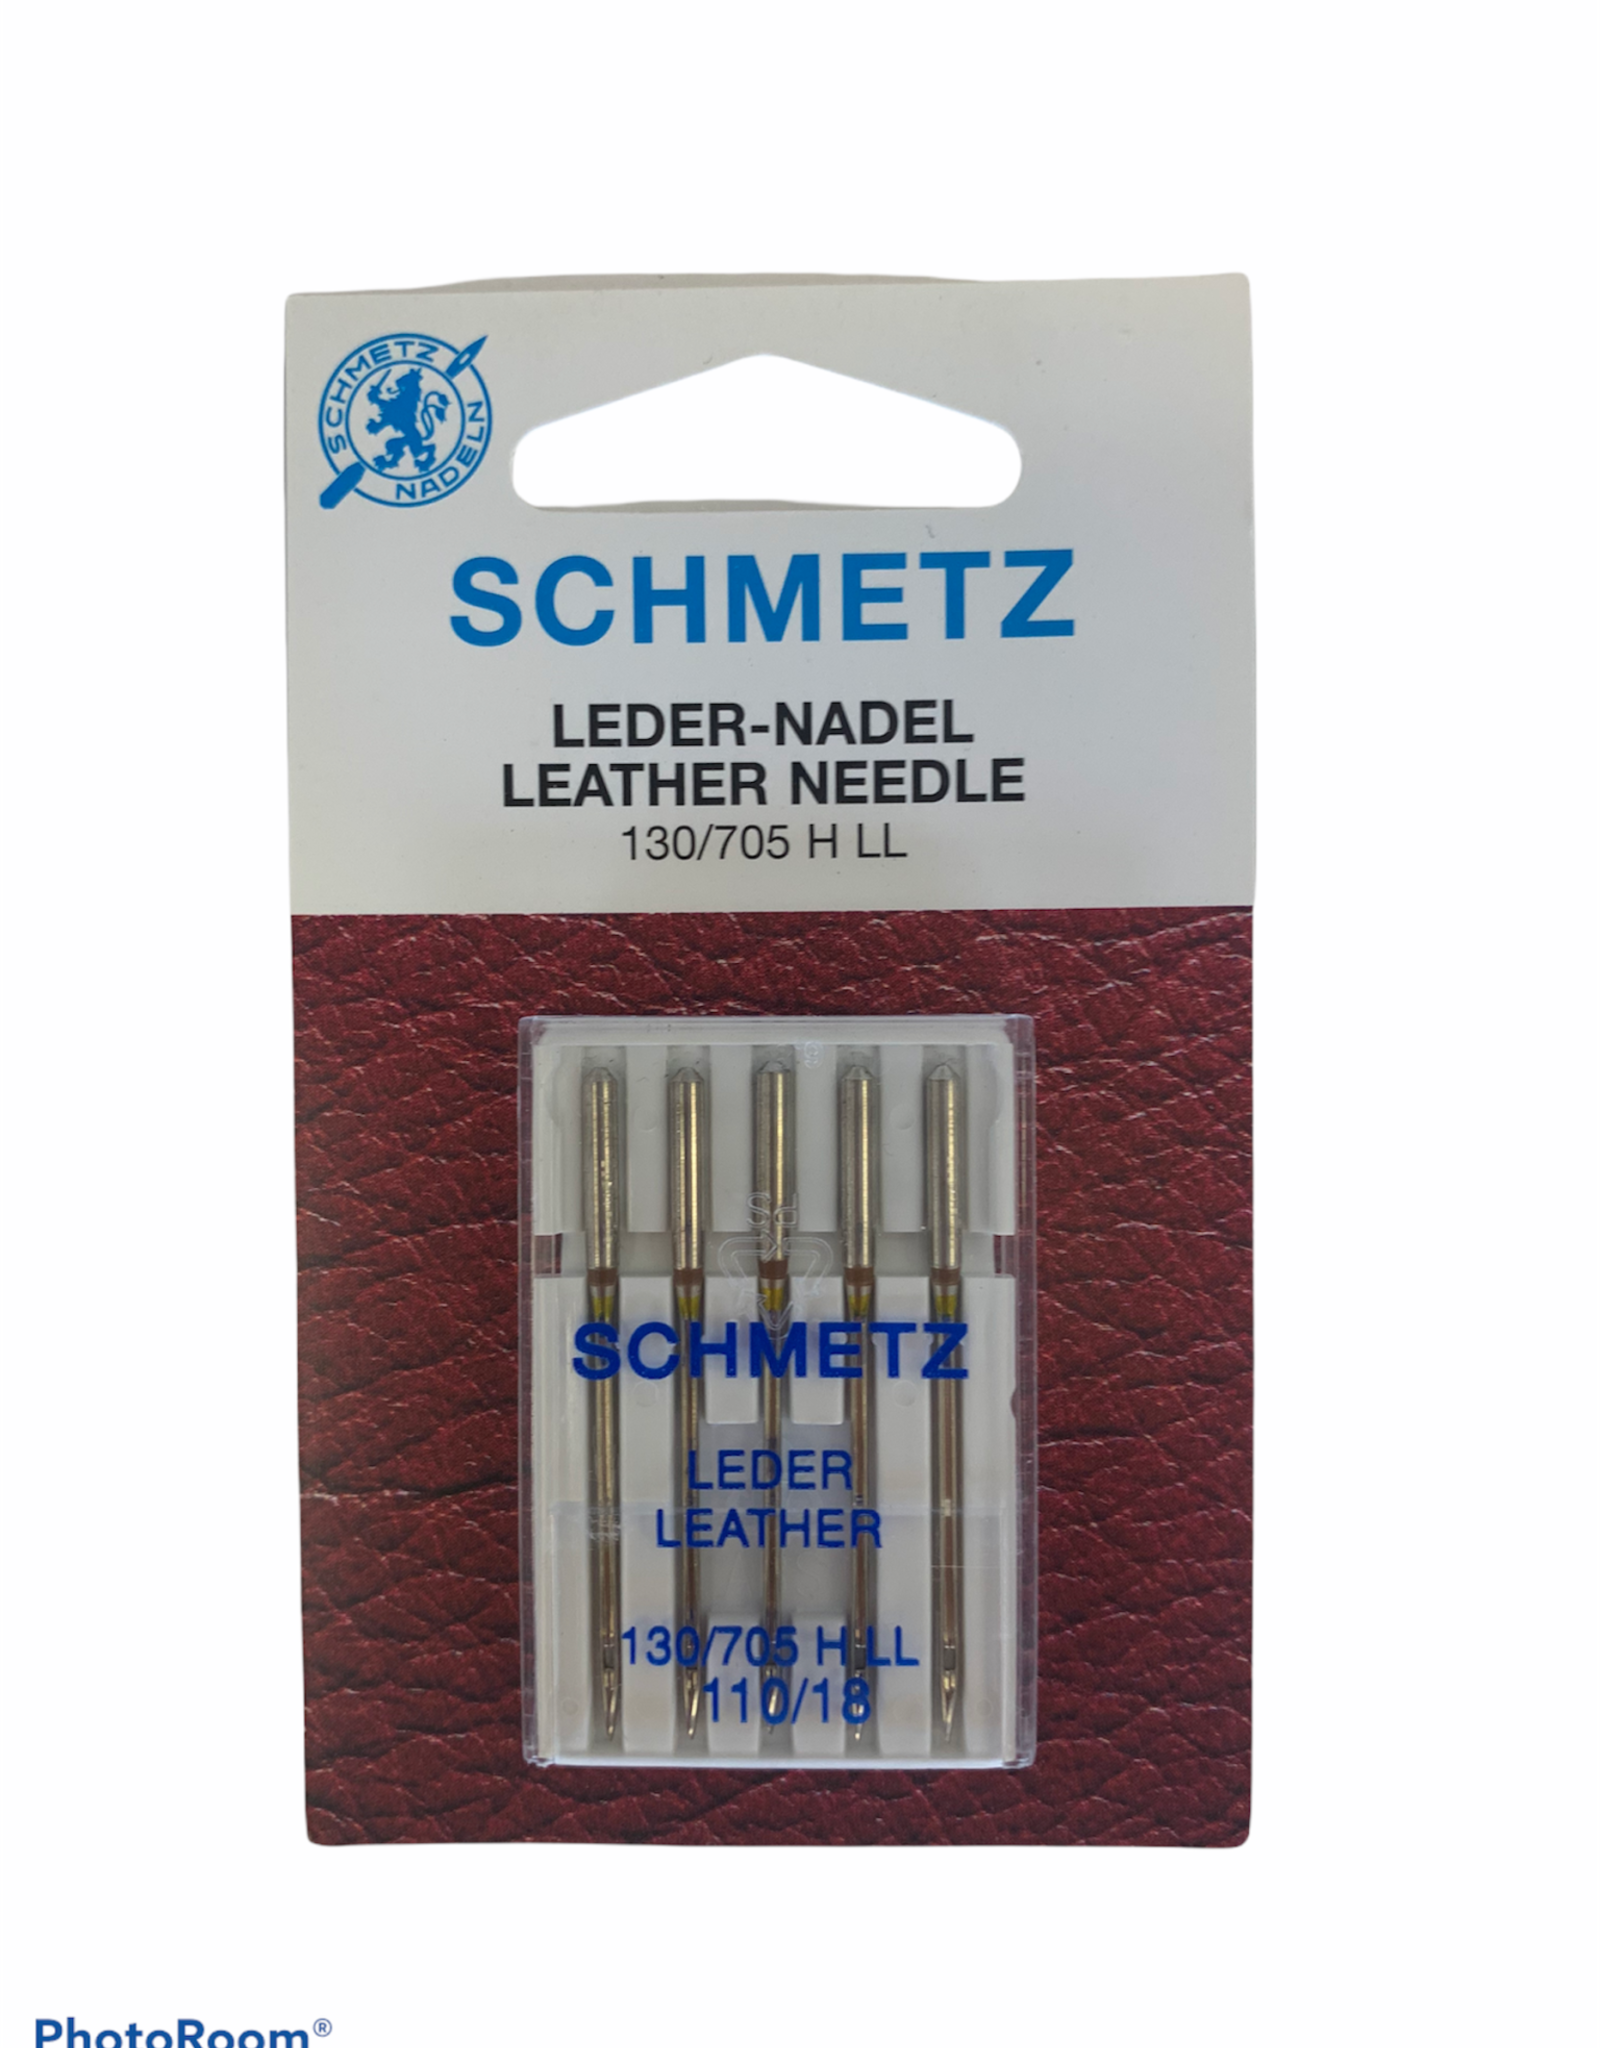 Schmetz Schmetz Leather Needle 110/18, 130/705 HLL